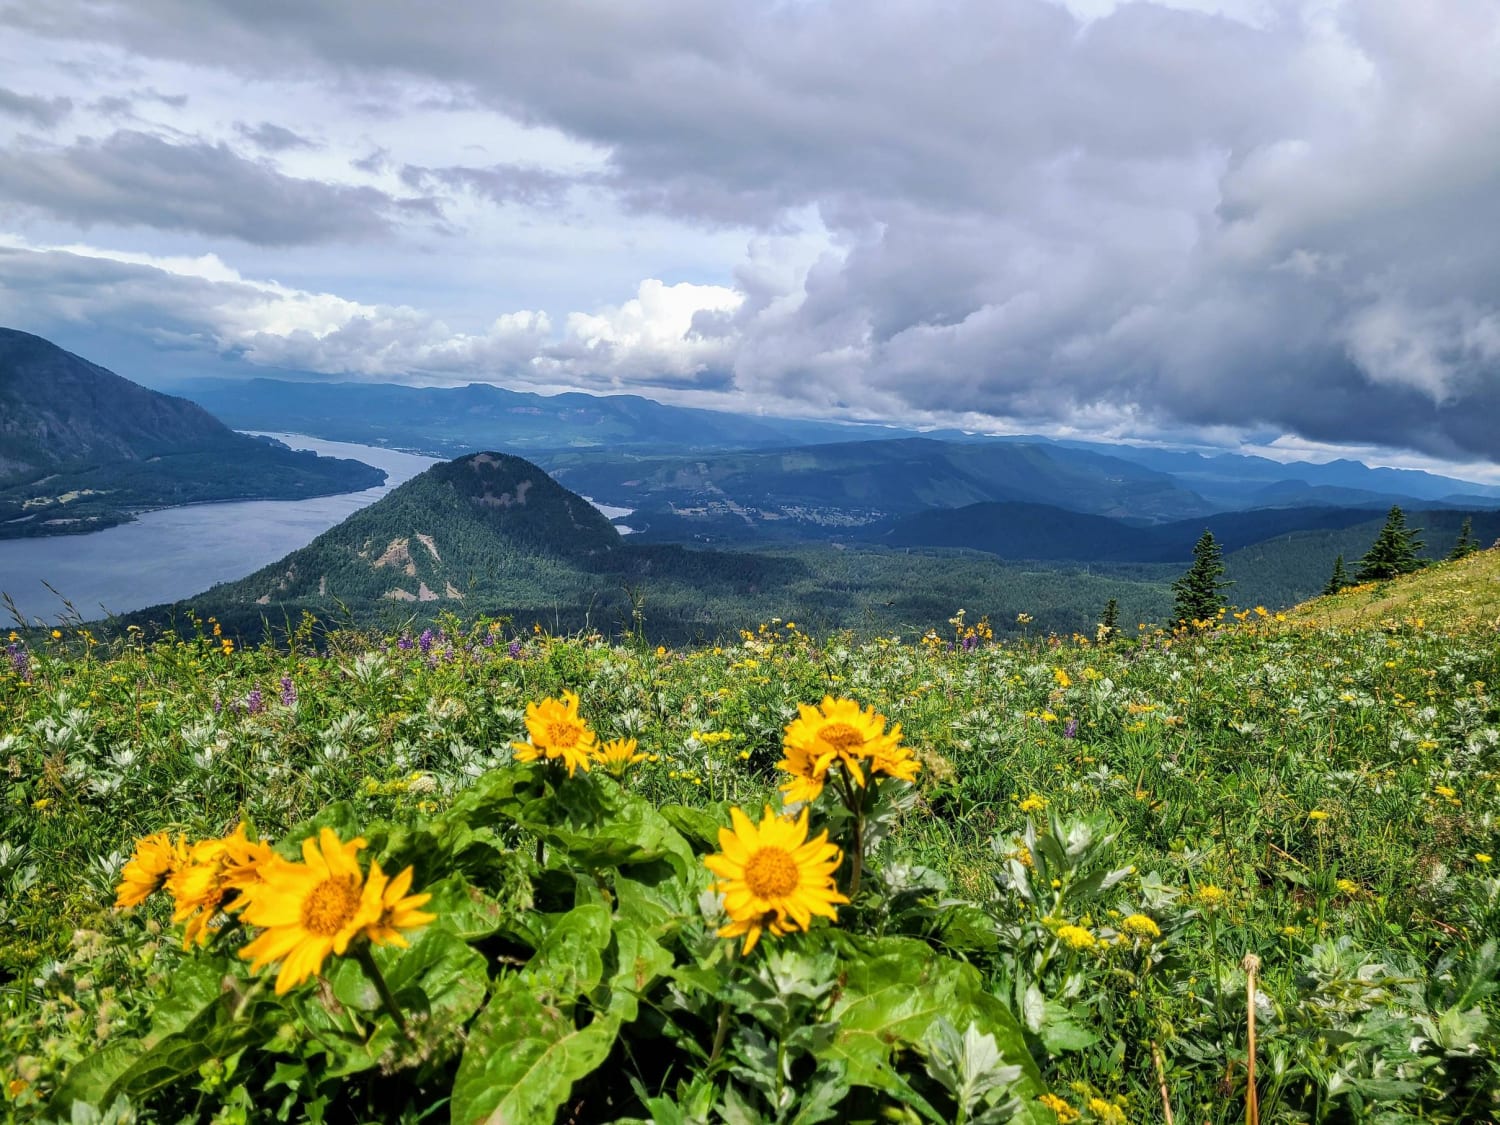 Caught the end of wildflower season on Dog Mountain in Washington!